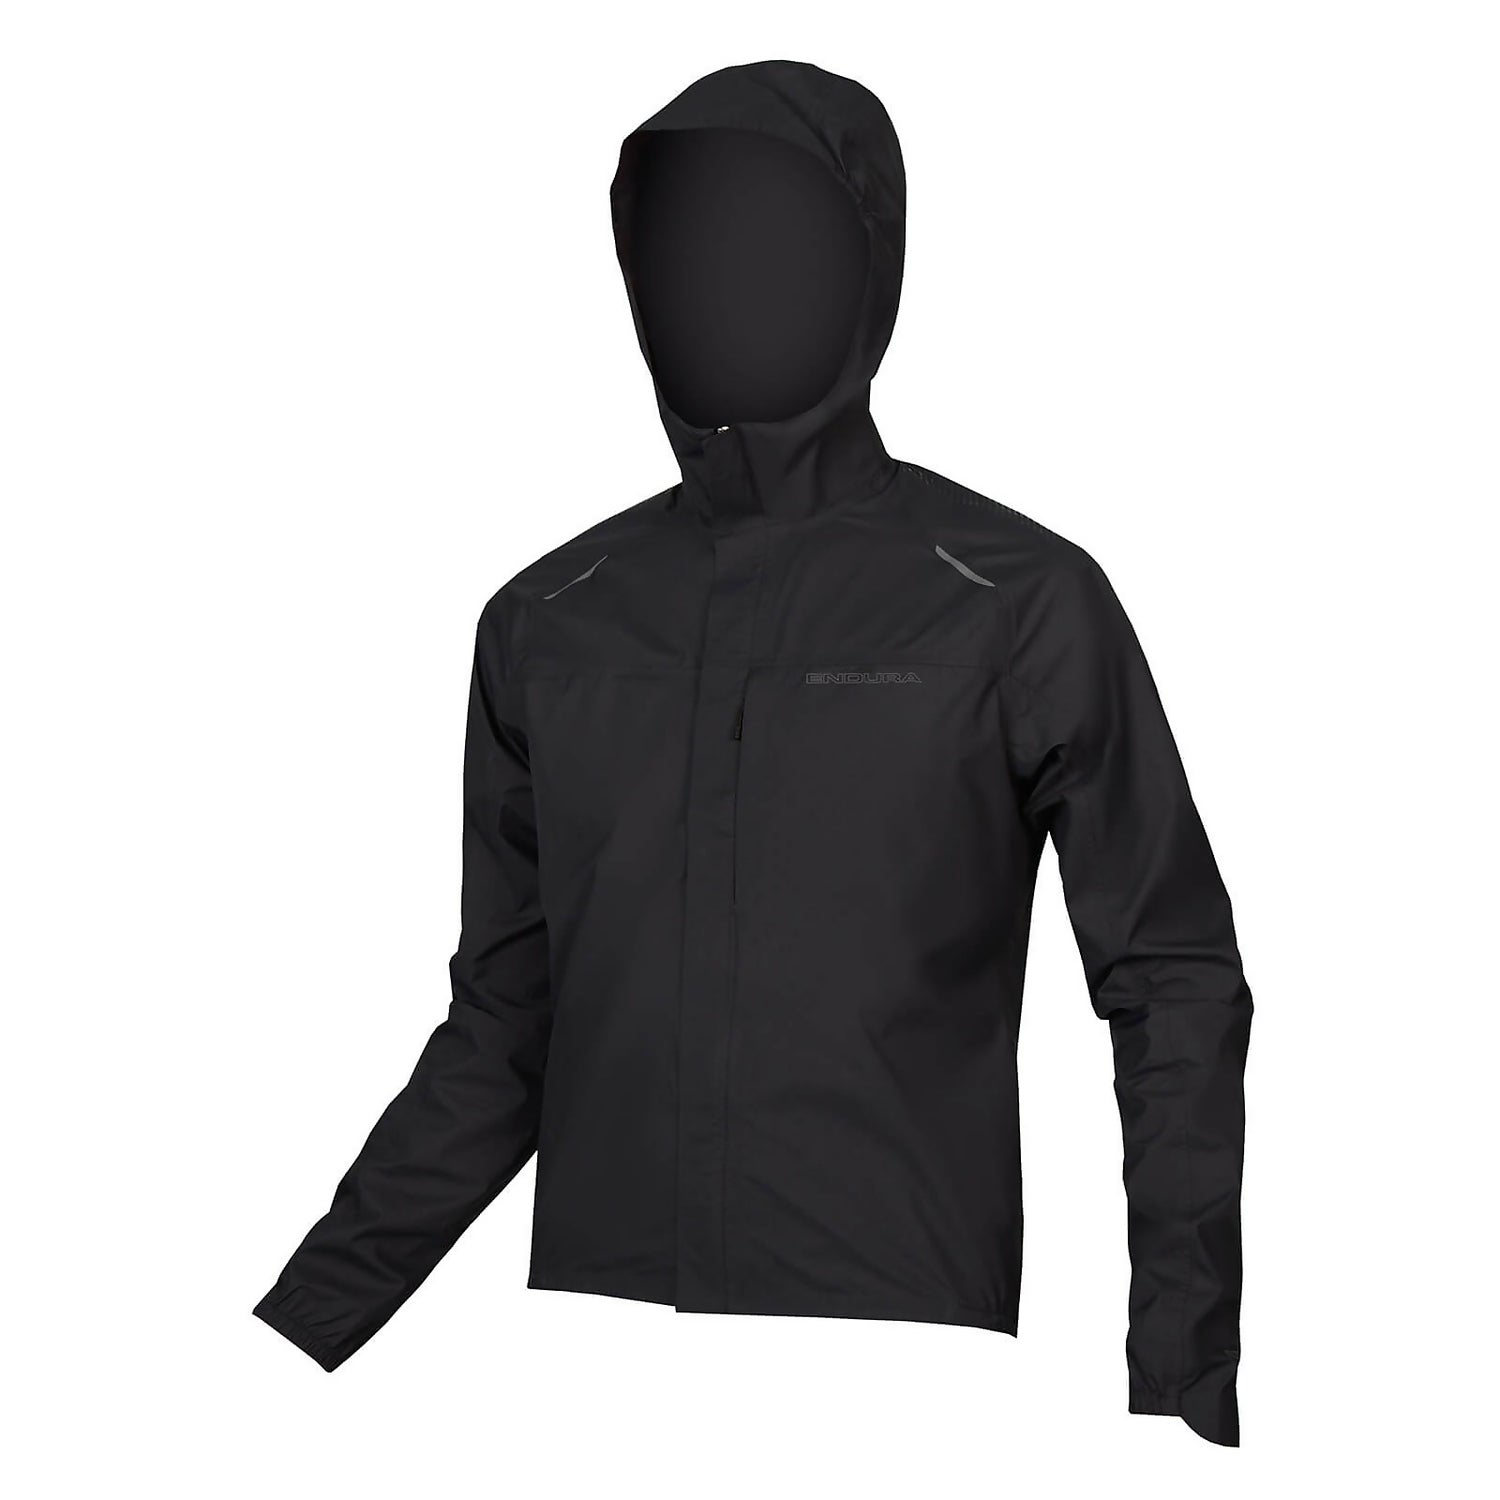 GV500 Waterproof Jacket - Black - XXXL